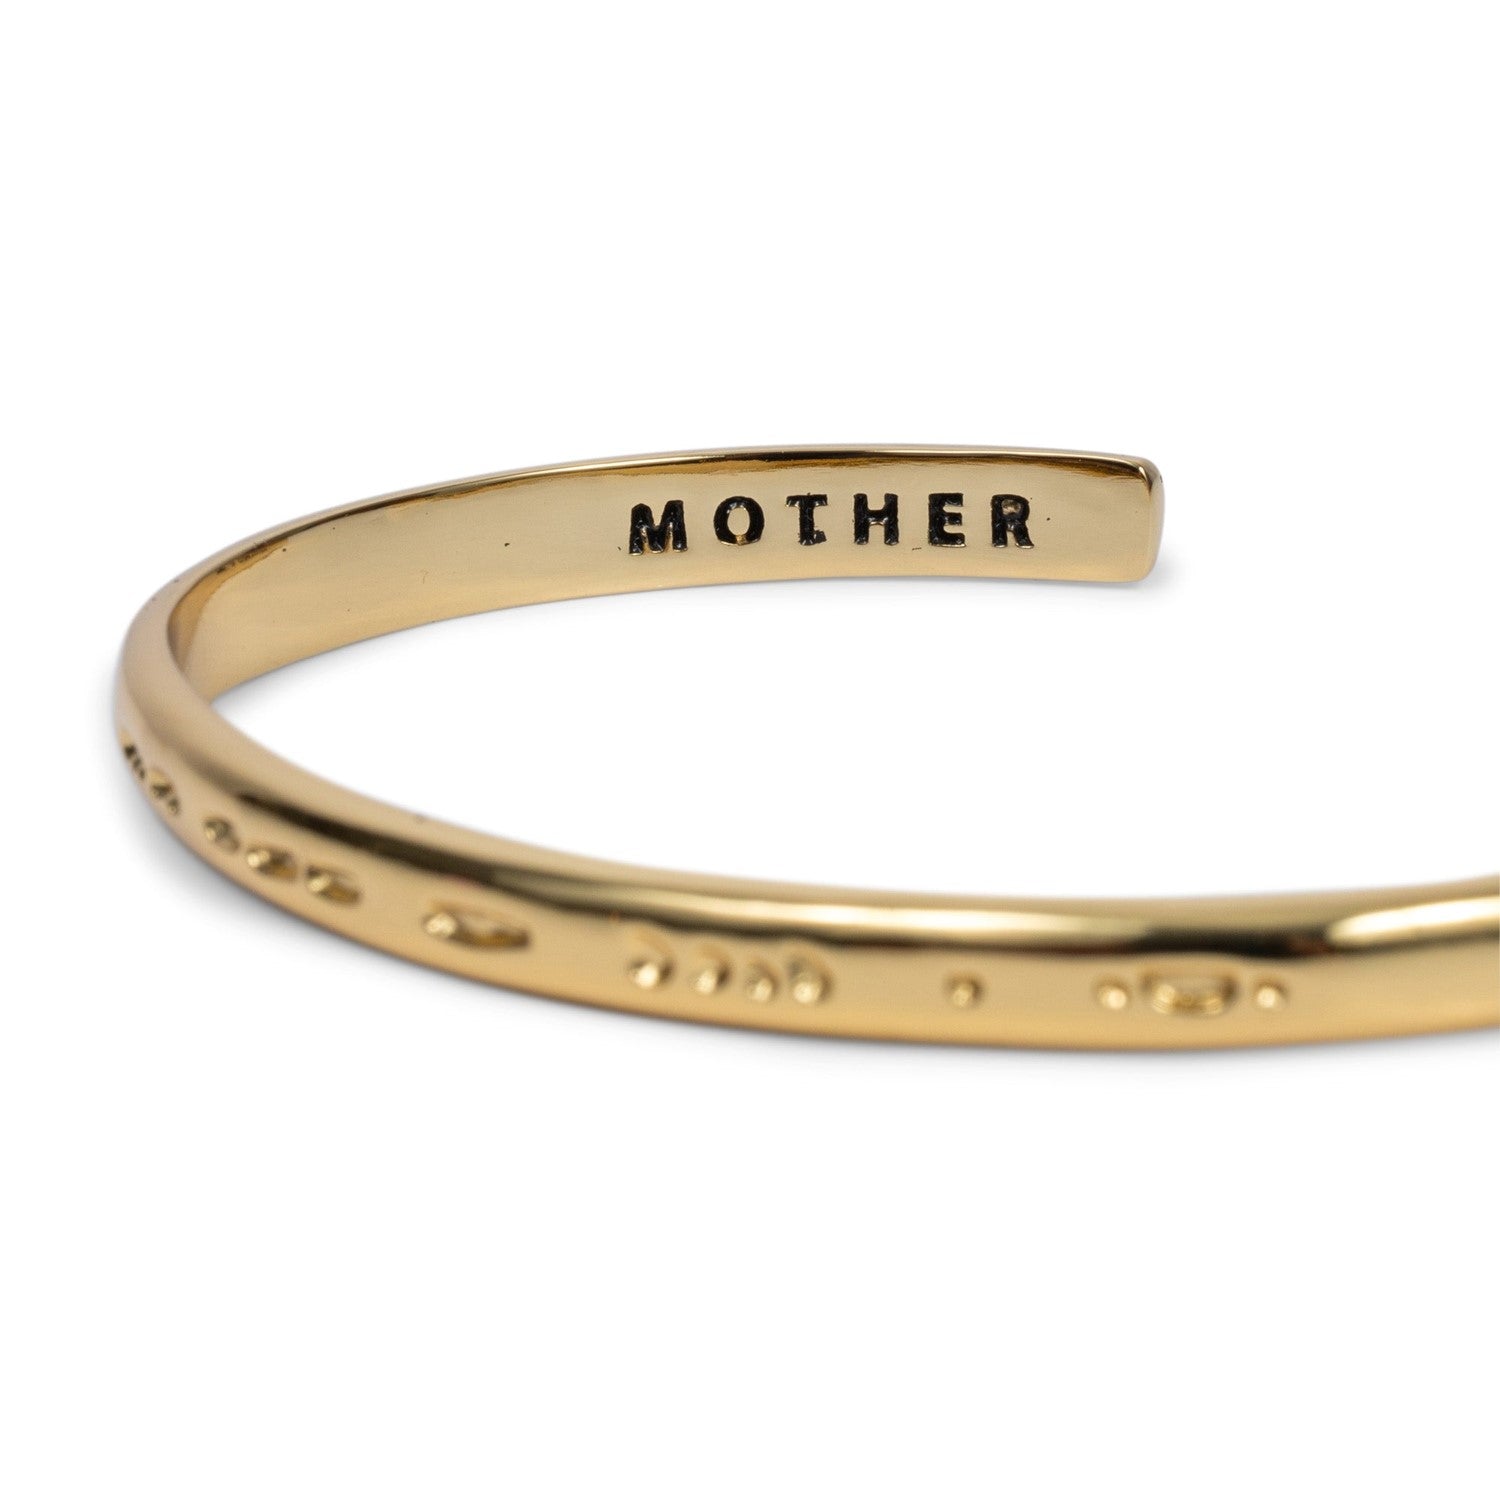 Morse Code Gold Cuff Bracelet - Mother